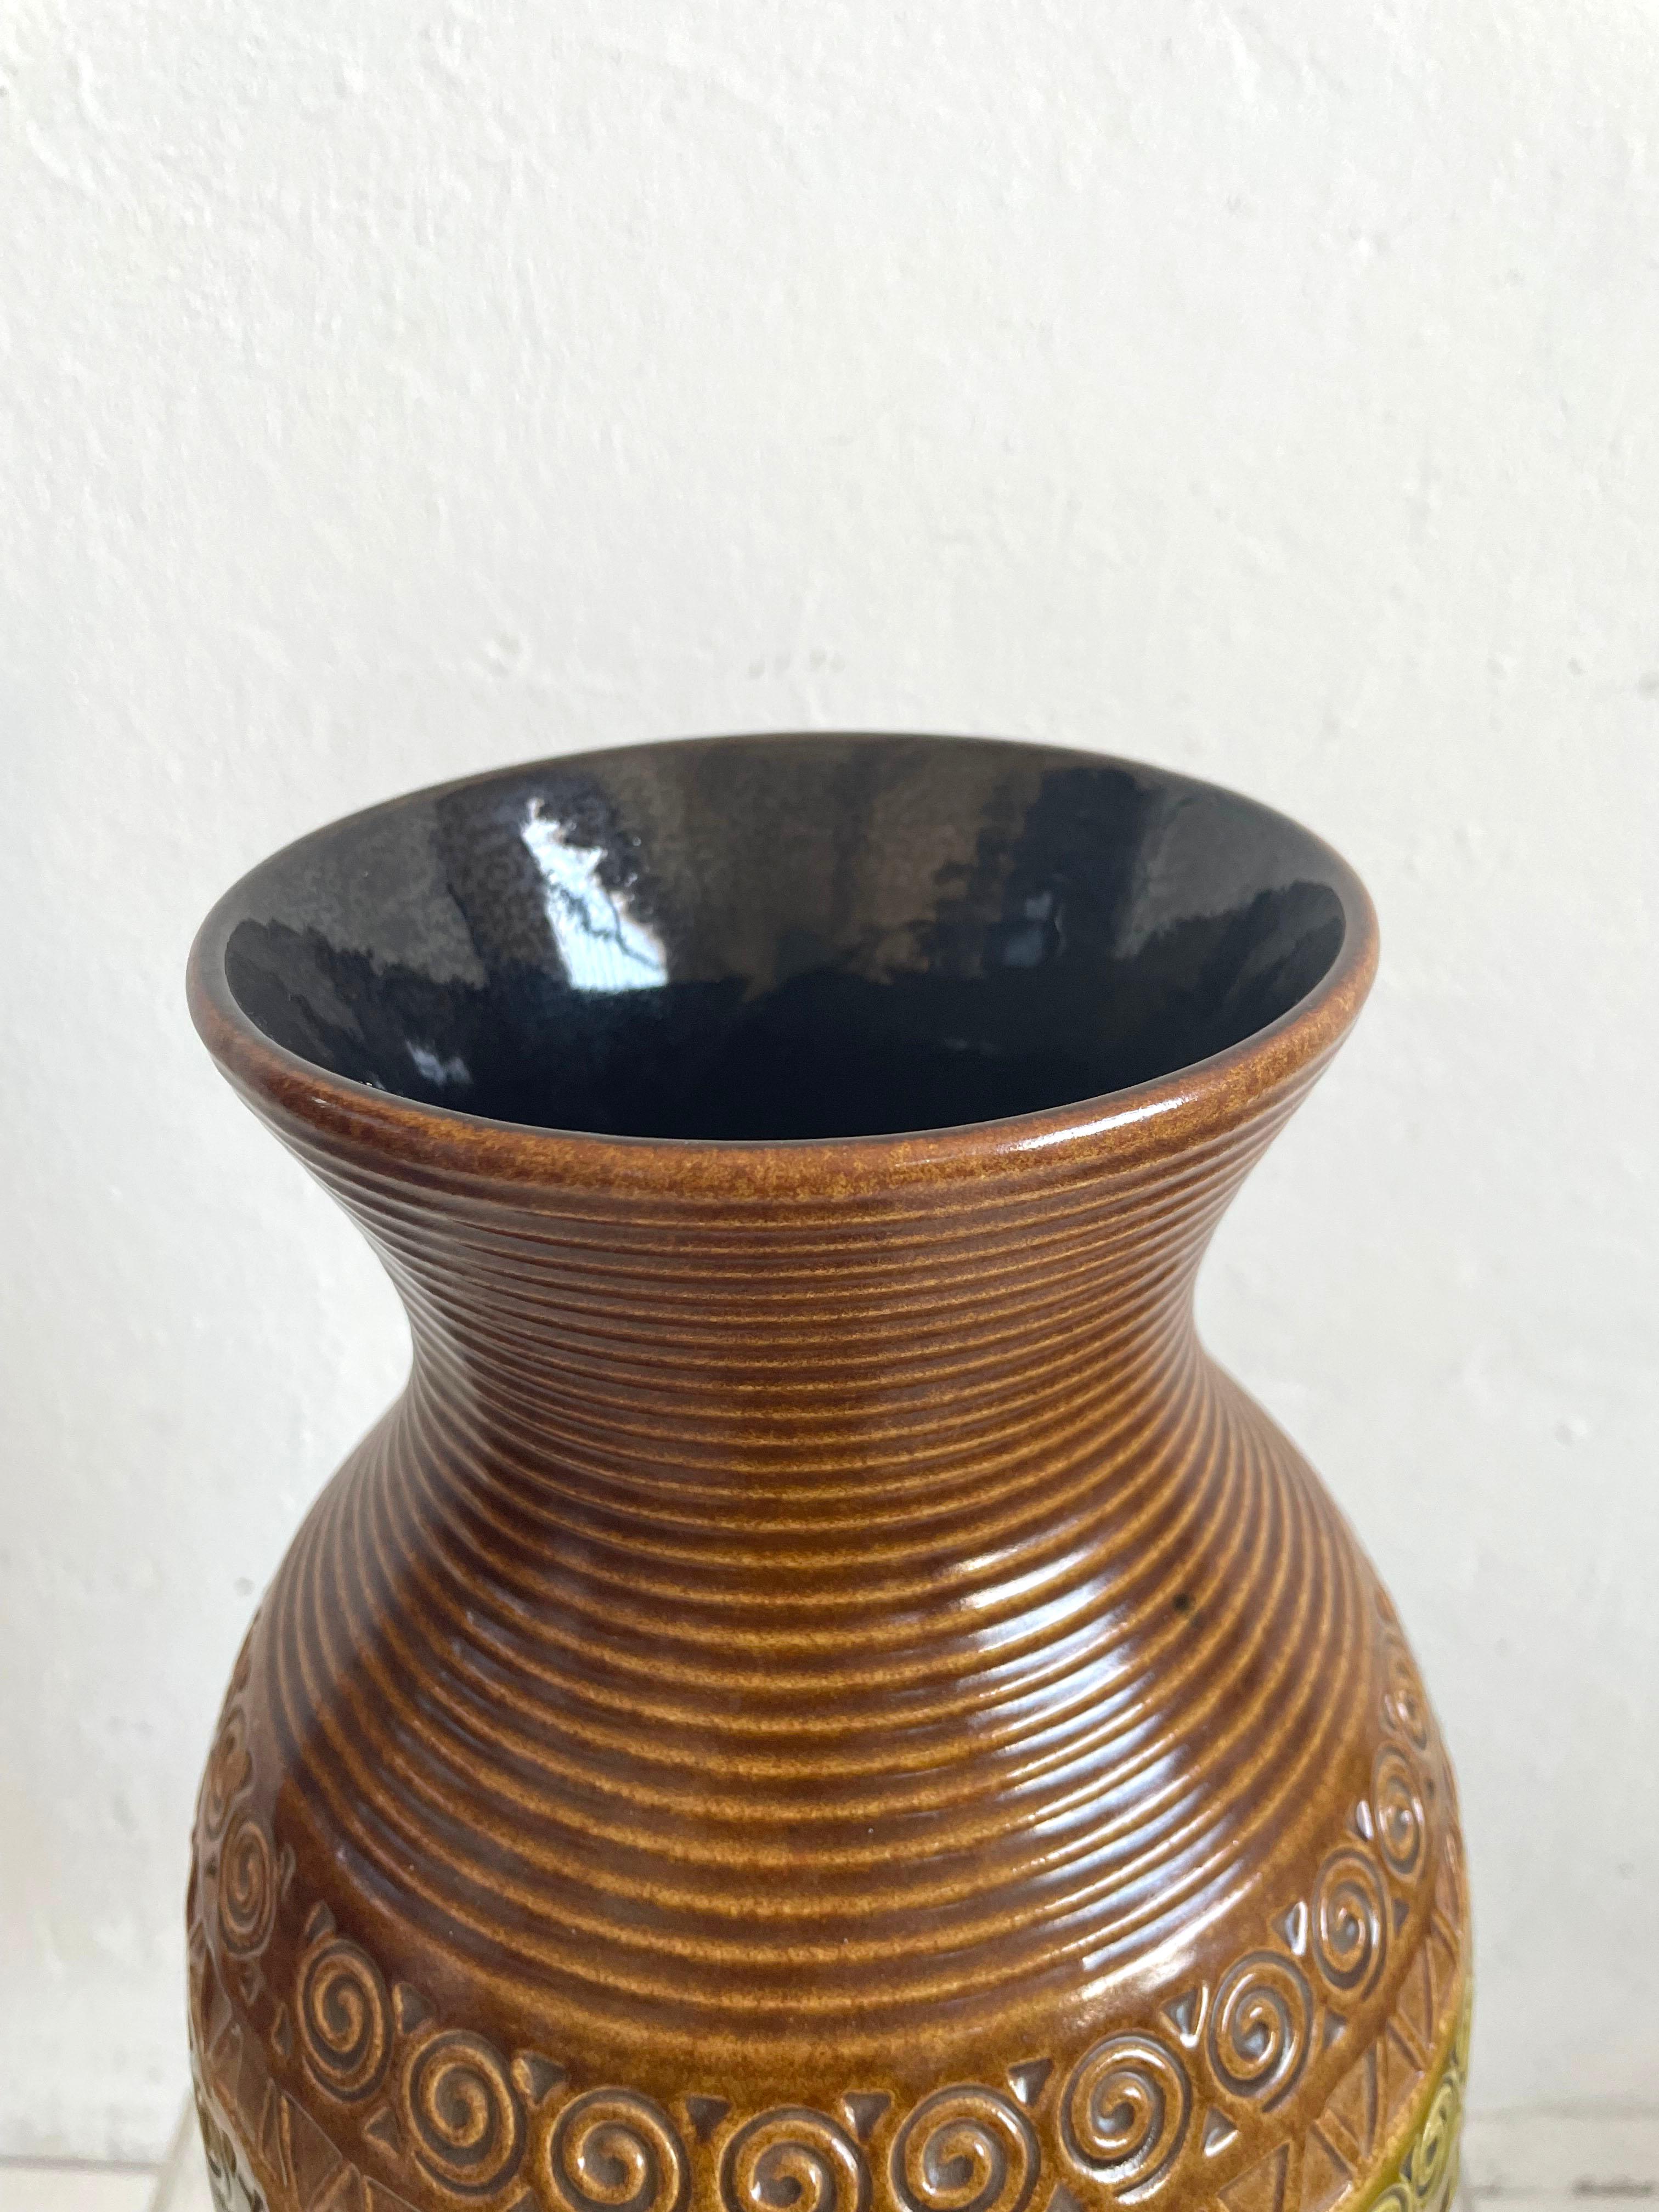 Ceramic Monumental Mid Century German Pottery XL Floor Vase, Bitossi Style, 1960s 1970s